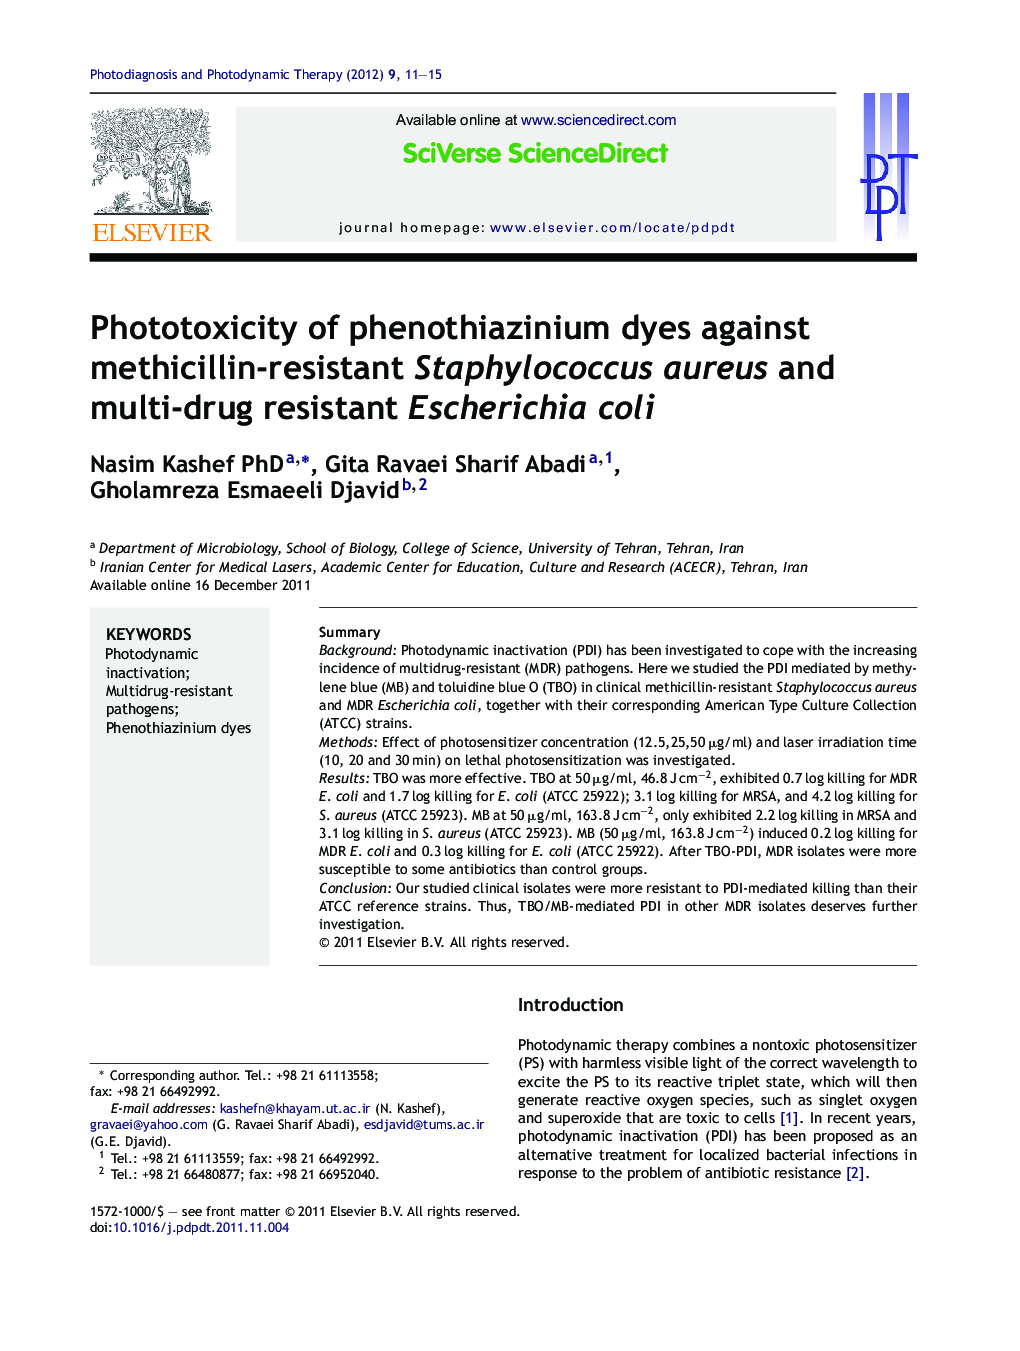 Phototoxicity of phenothiazinium dyes against methicillin-resistant Staphylococcus aureus and multi-drug resistant Escherichia coli